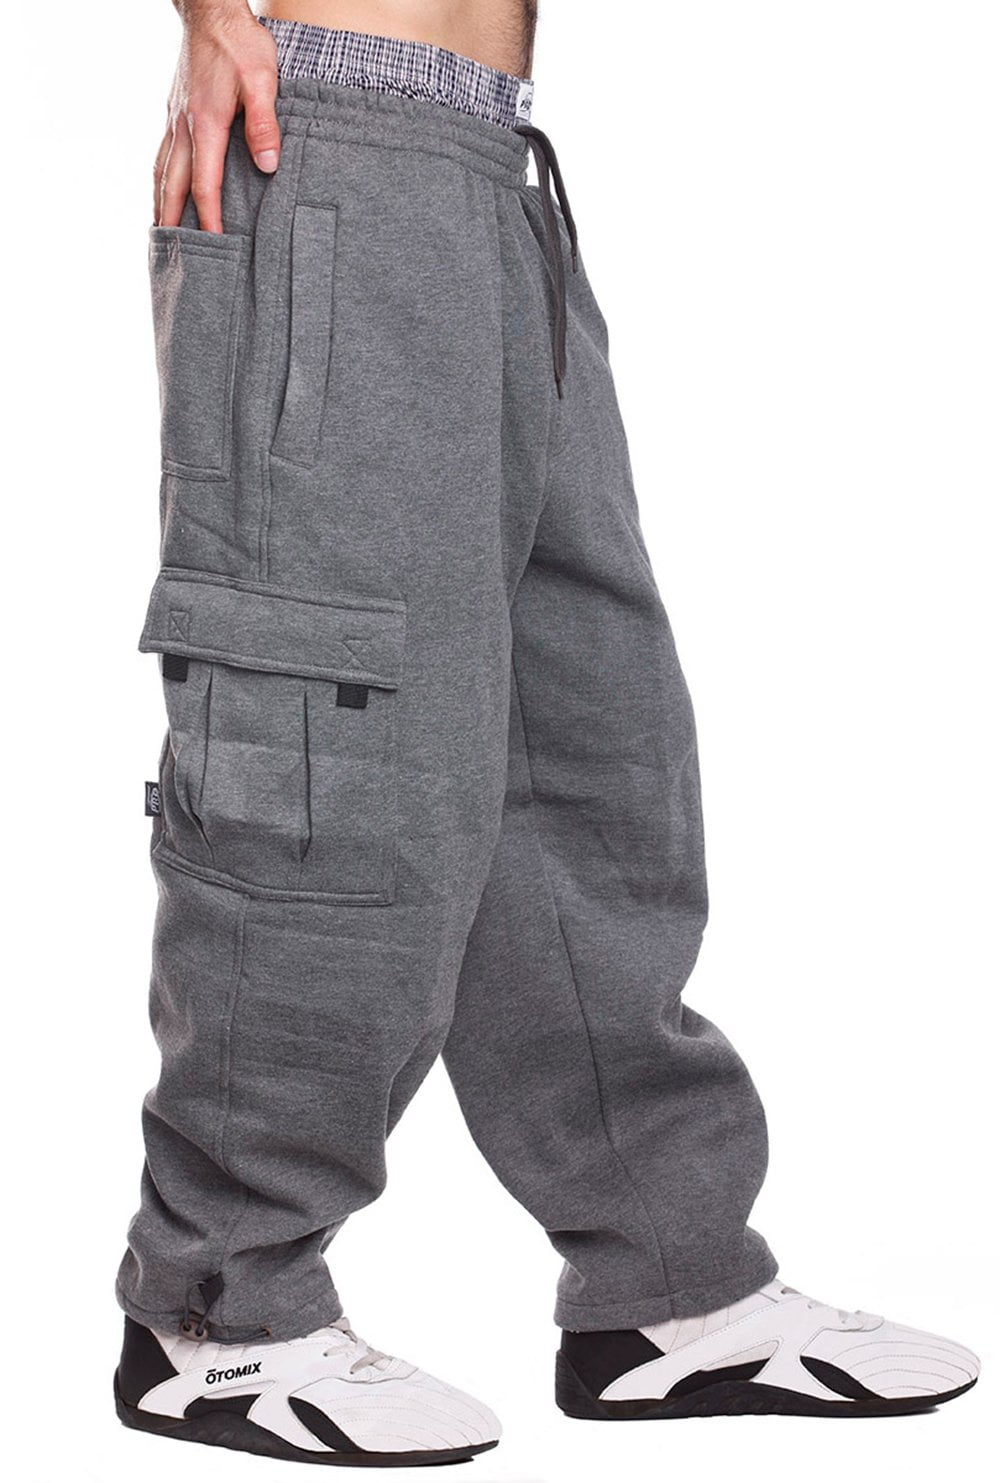 Pro 5 - Pro 5 Mens Fleece Cargo Sweatpants,Dark Grey,3XL - Walmart.com